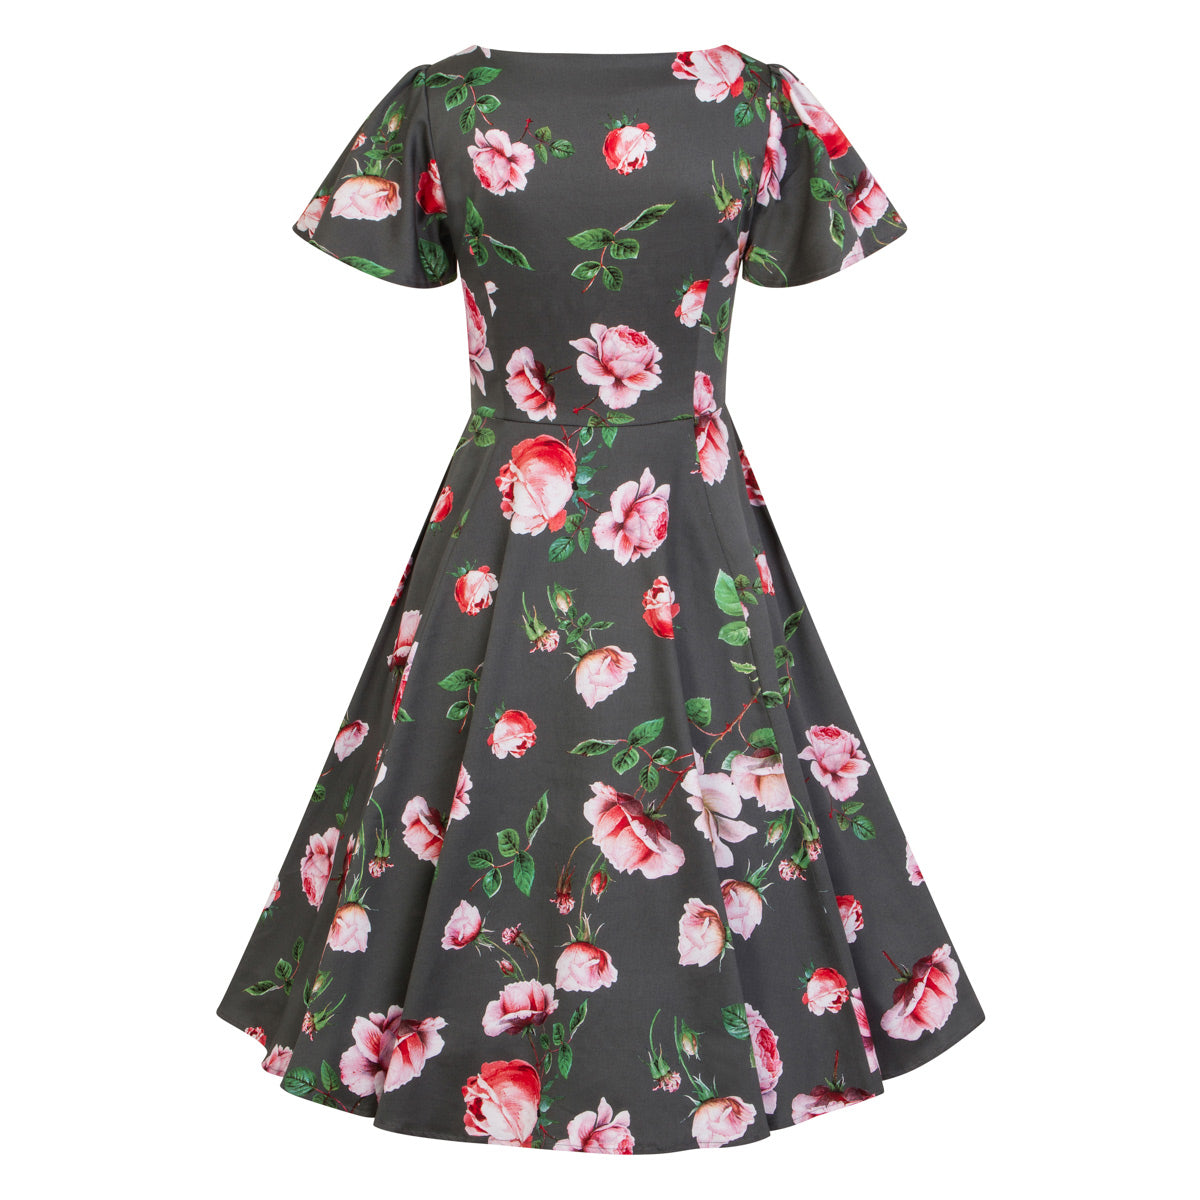 Sage Green Floral Print Cap Sleeve Rockabilly 50s Swing Tea Dress - Pretty Kitty Fashion